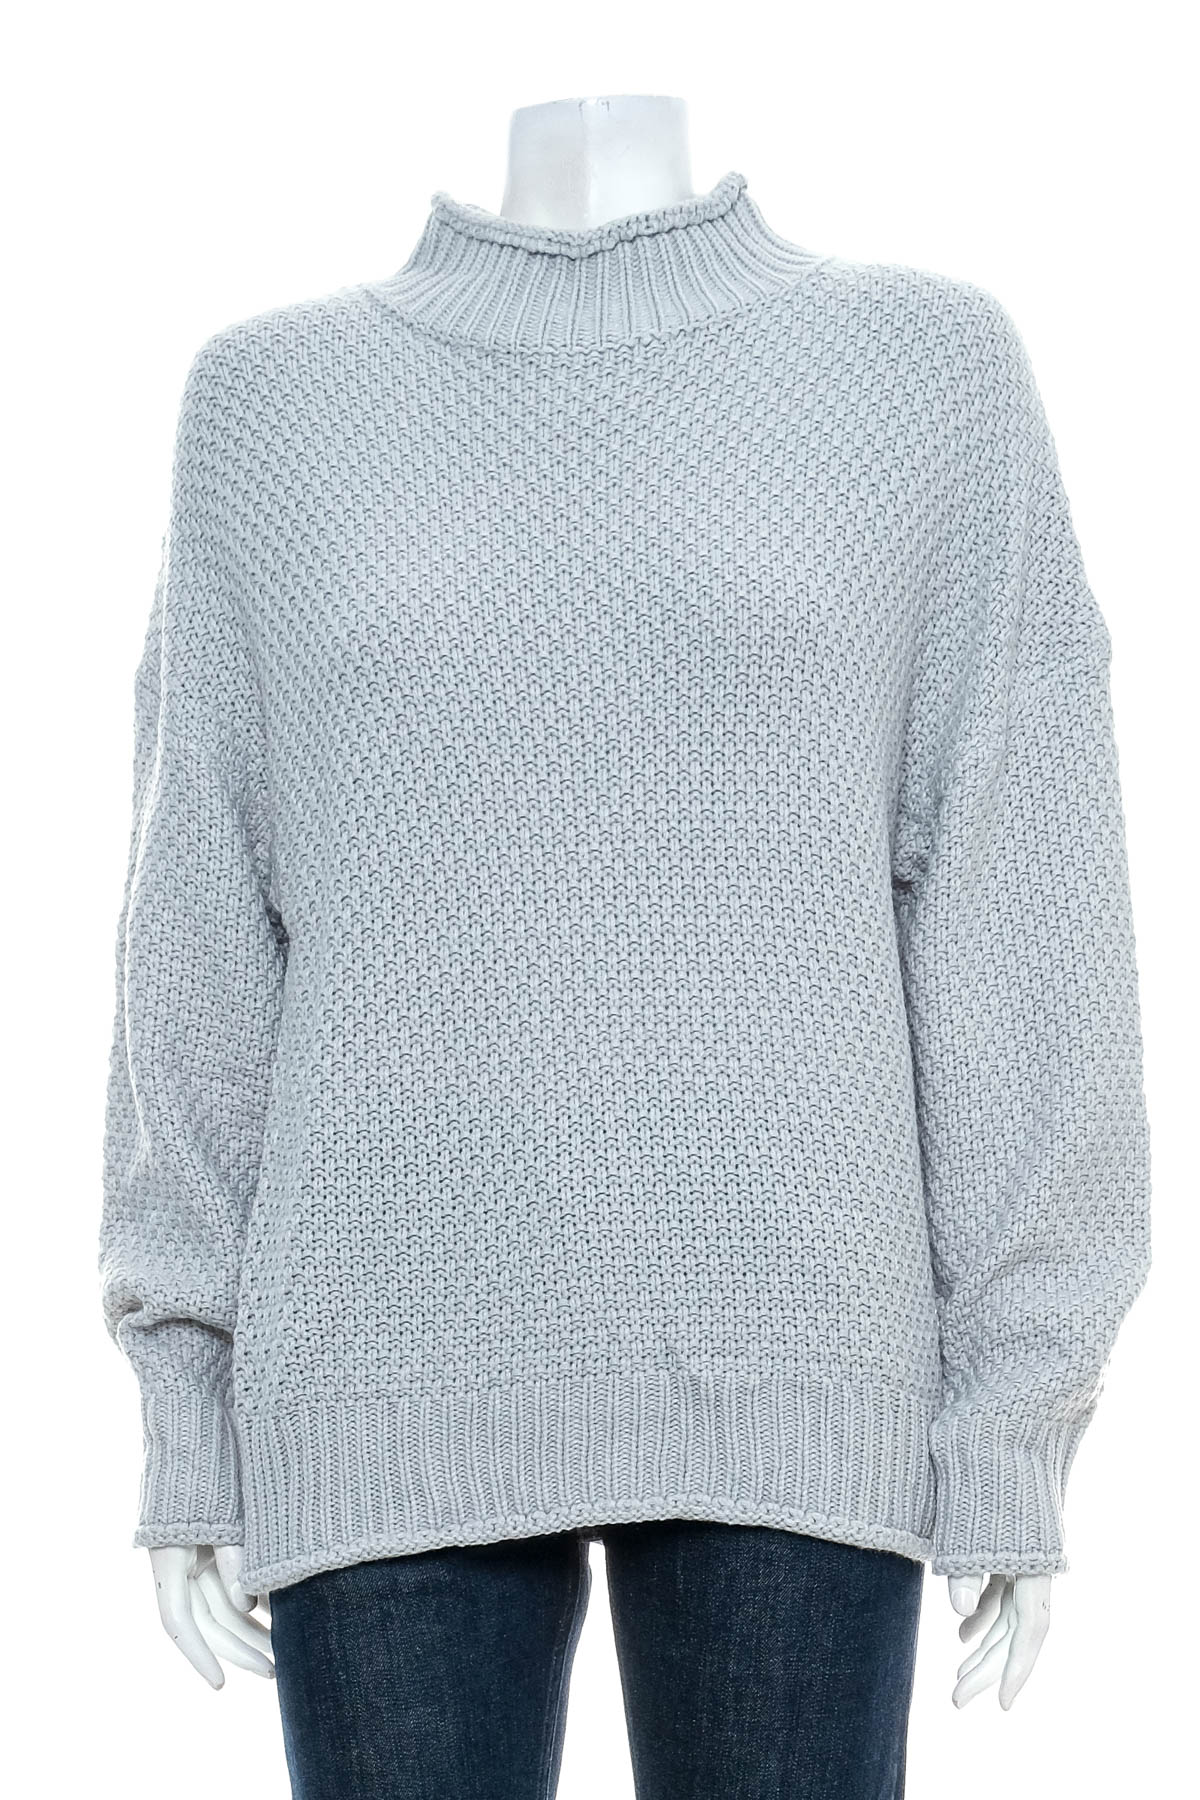 Women's sweater - Tecrew - 0